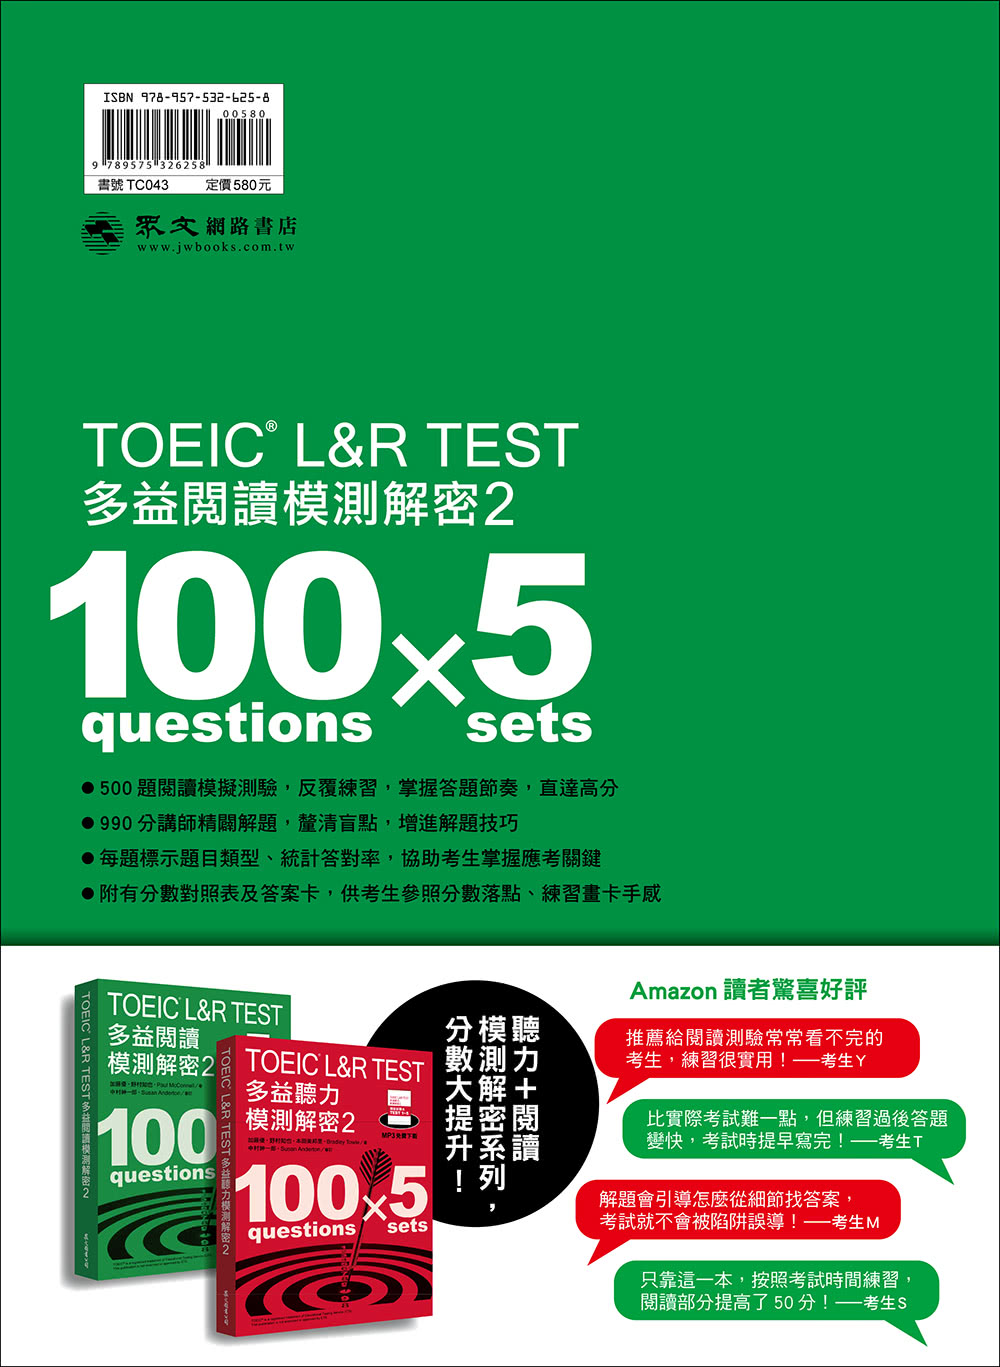 TOEIC L&R TEST 多益閱讀模測解密2